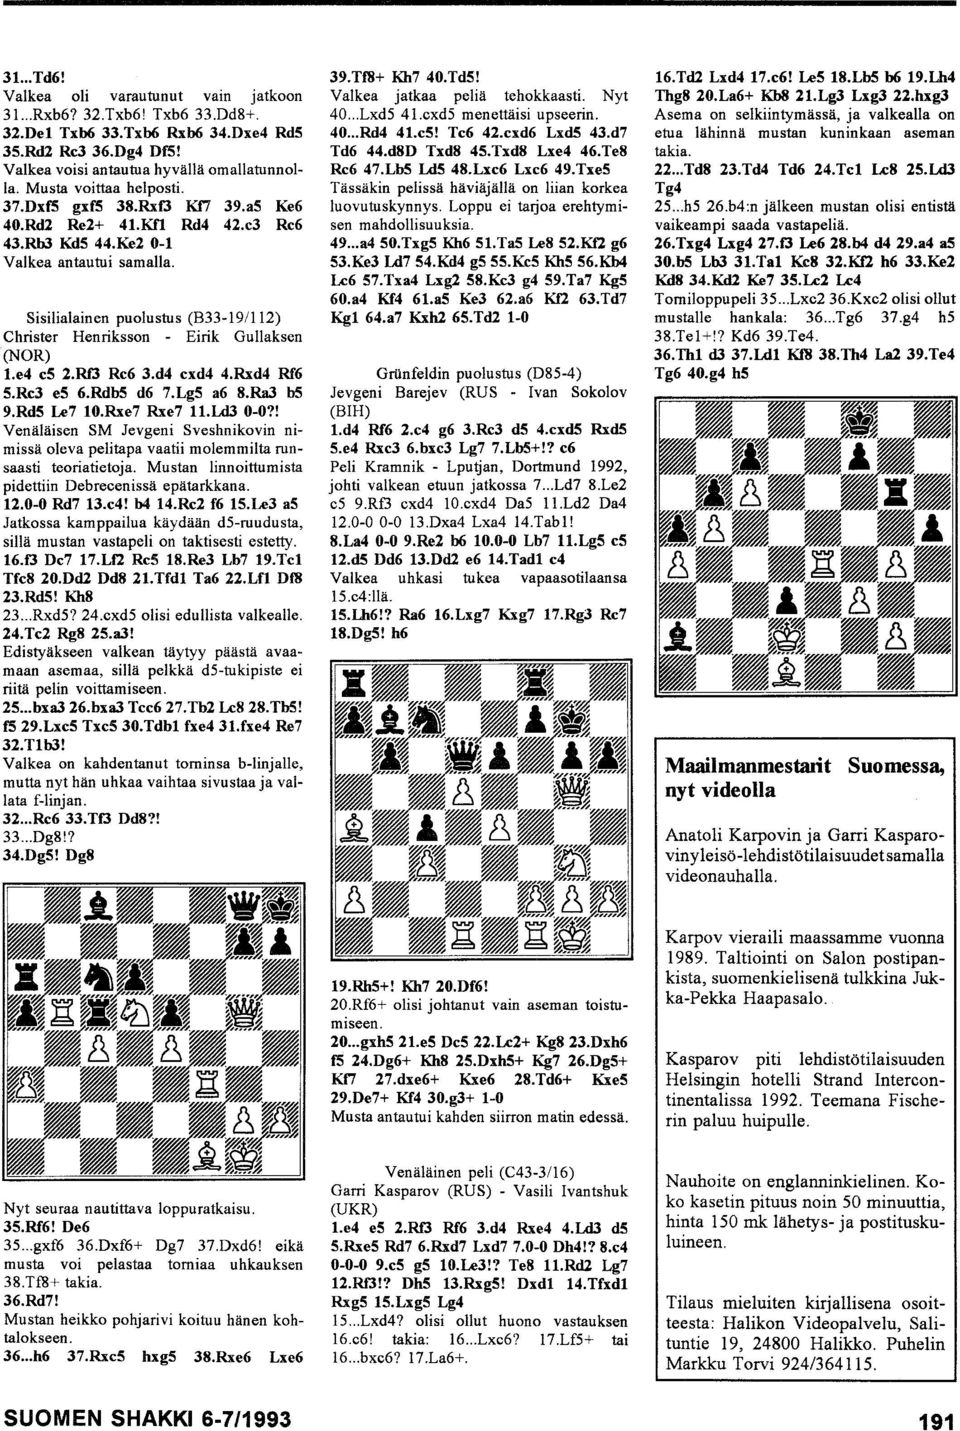 Sisilialainen puolustus (B33-191112) Christer Henriksson - Eirik Gullaksen (NOR) l.e4 es 2.Rf3 Re6 3.d4 exd4 4.Rxd4 Rf6 S.Re3 es 6.RdbS d6 7.LgS a6 8.Ra3 bs 9.RdS Le7 10.Rxe7 Rxe7 11.Ld3 O-O?